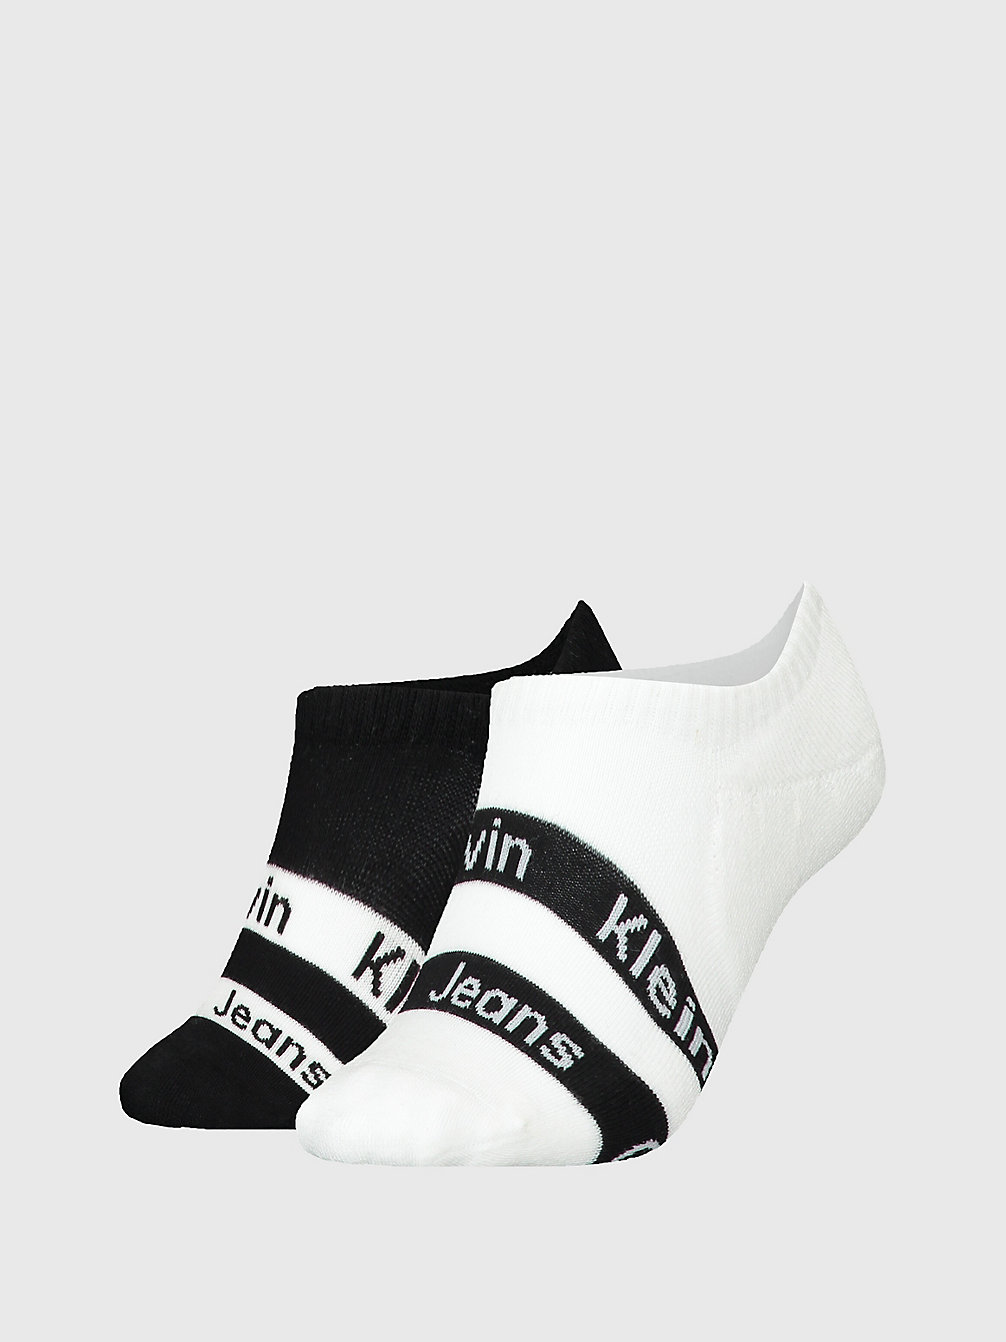 WHITE/BLACK 2 Pack Invisible Socks undefined women Calvin Klein